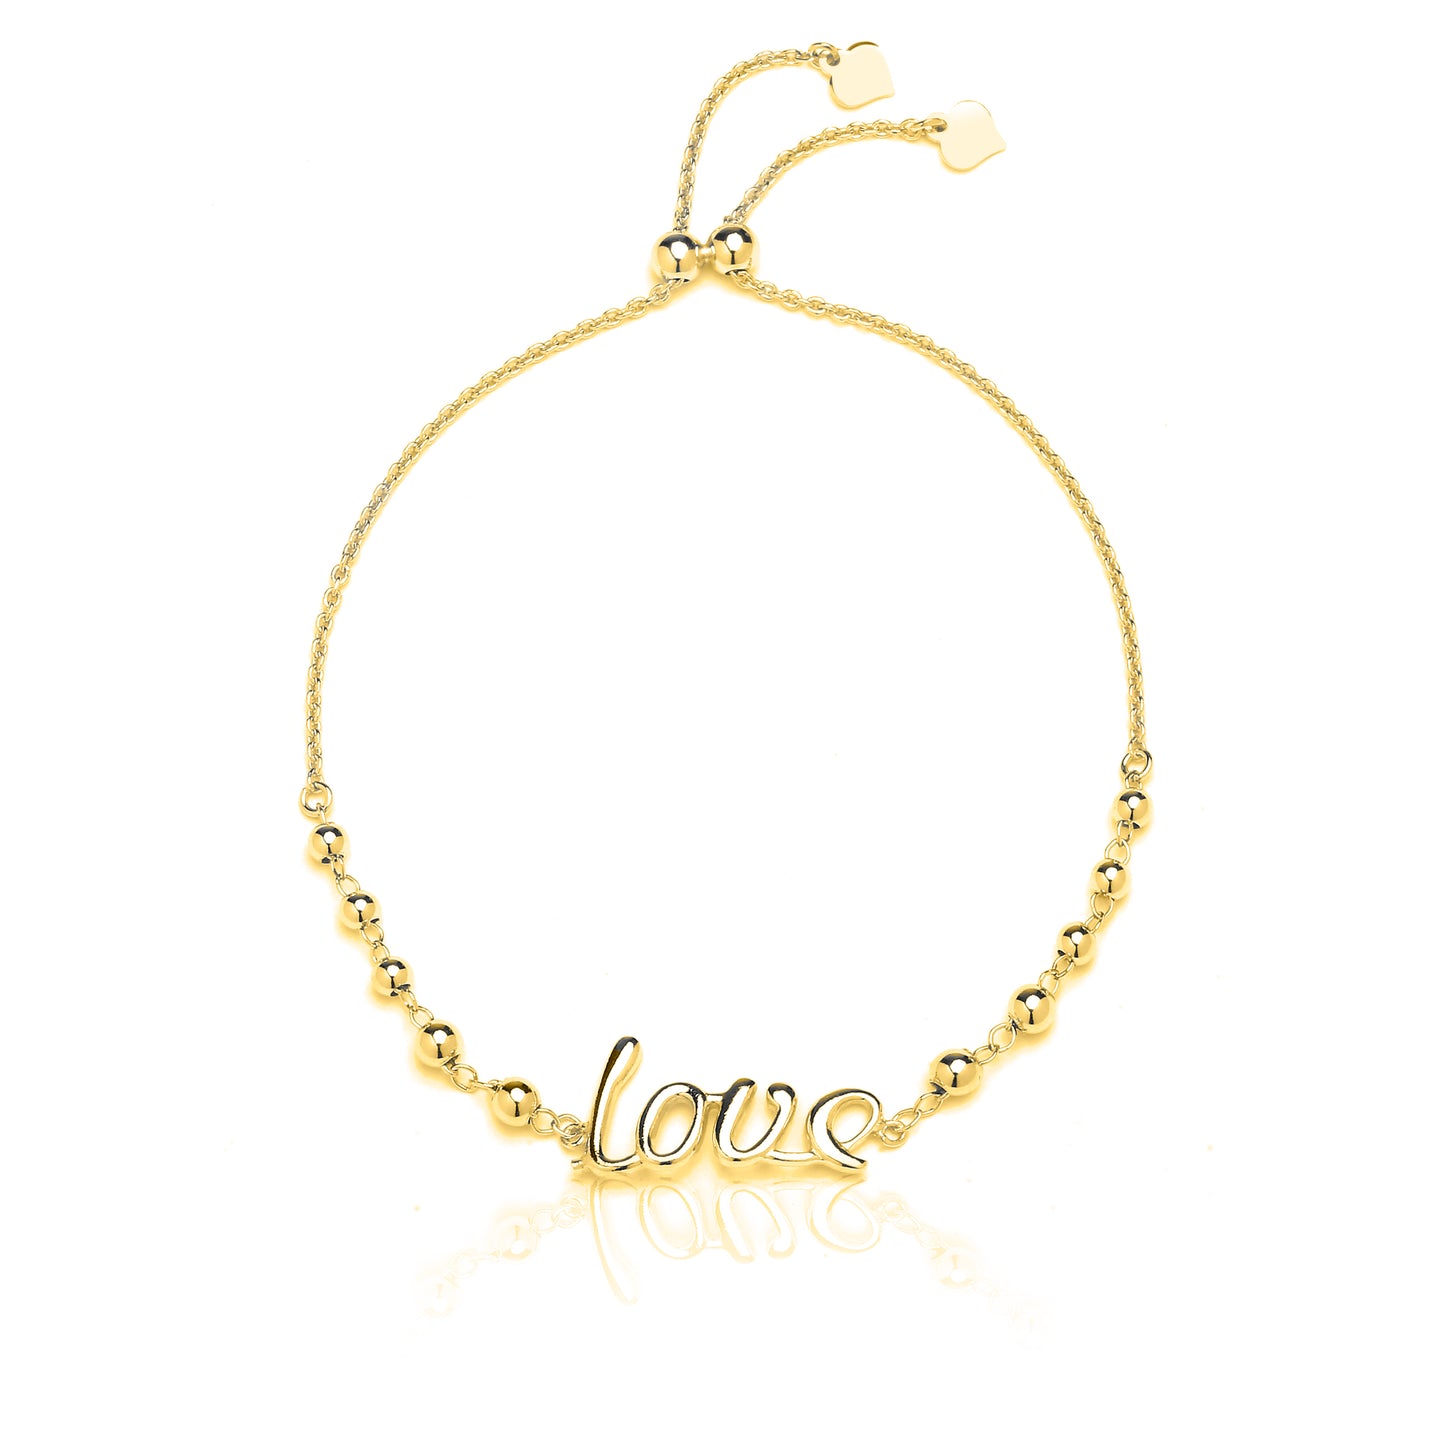 Gold Italian Sterling Silver Adjustable "Love" Bracelet